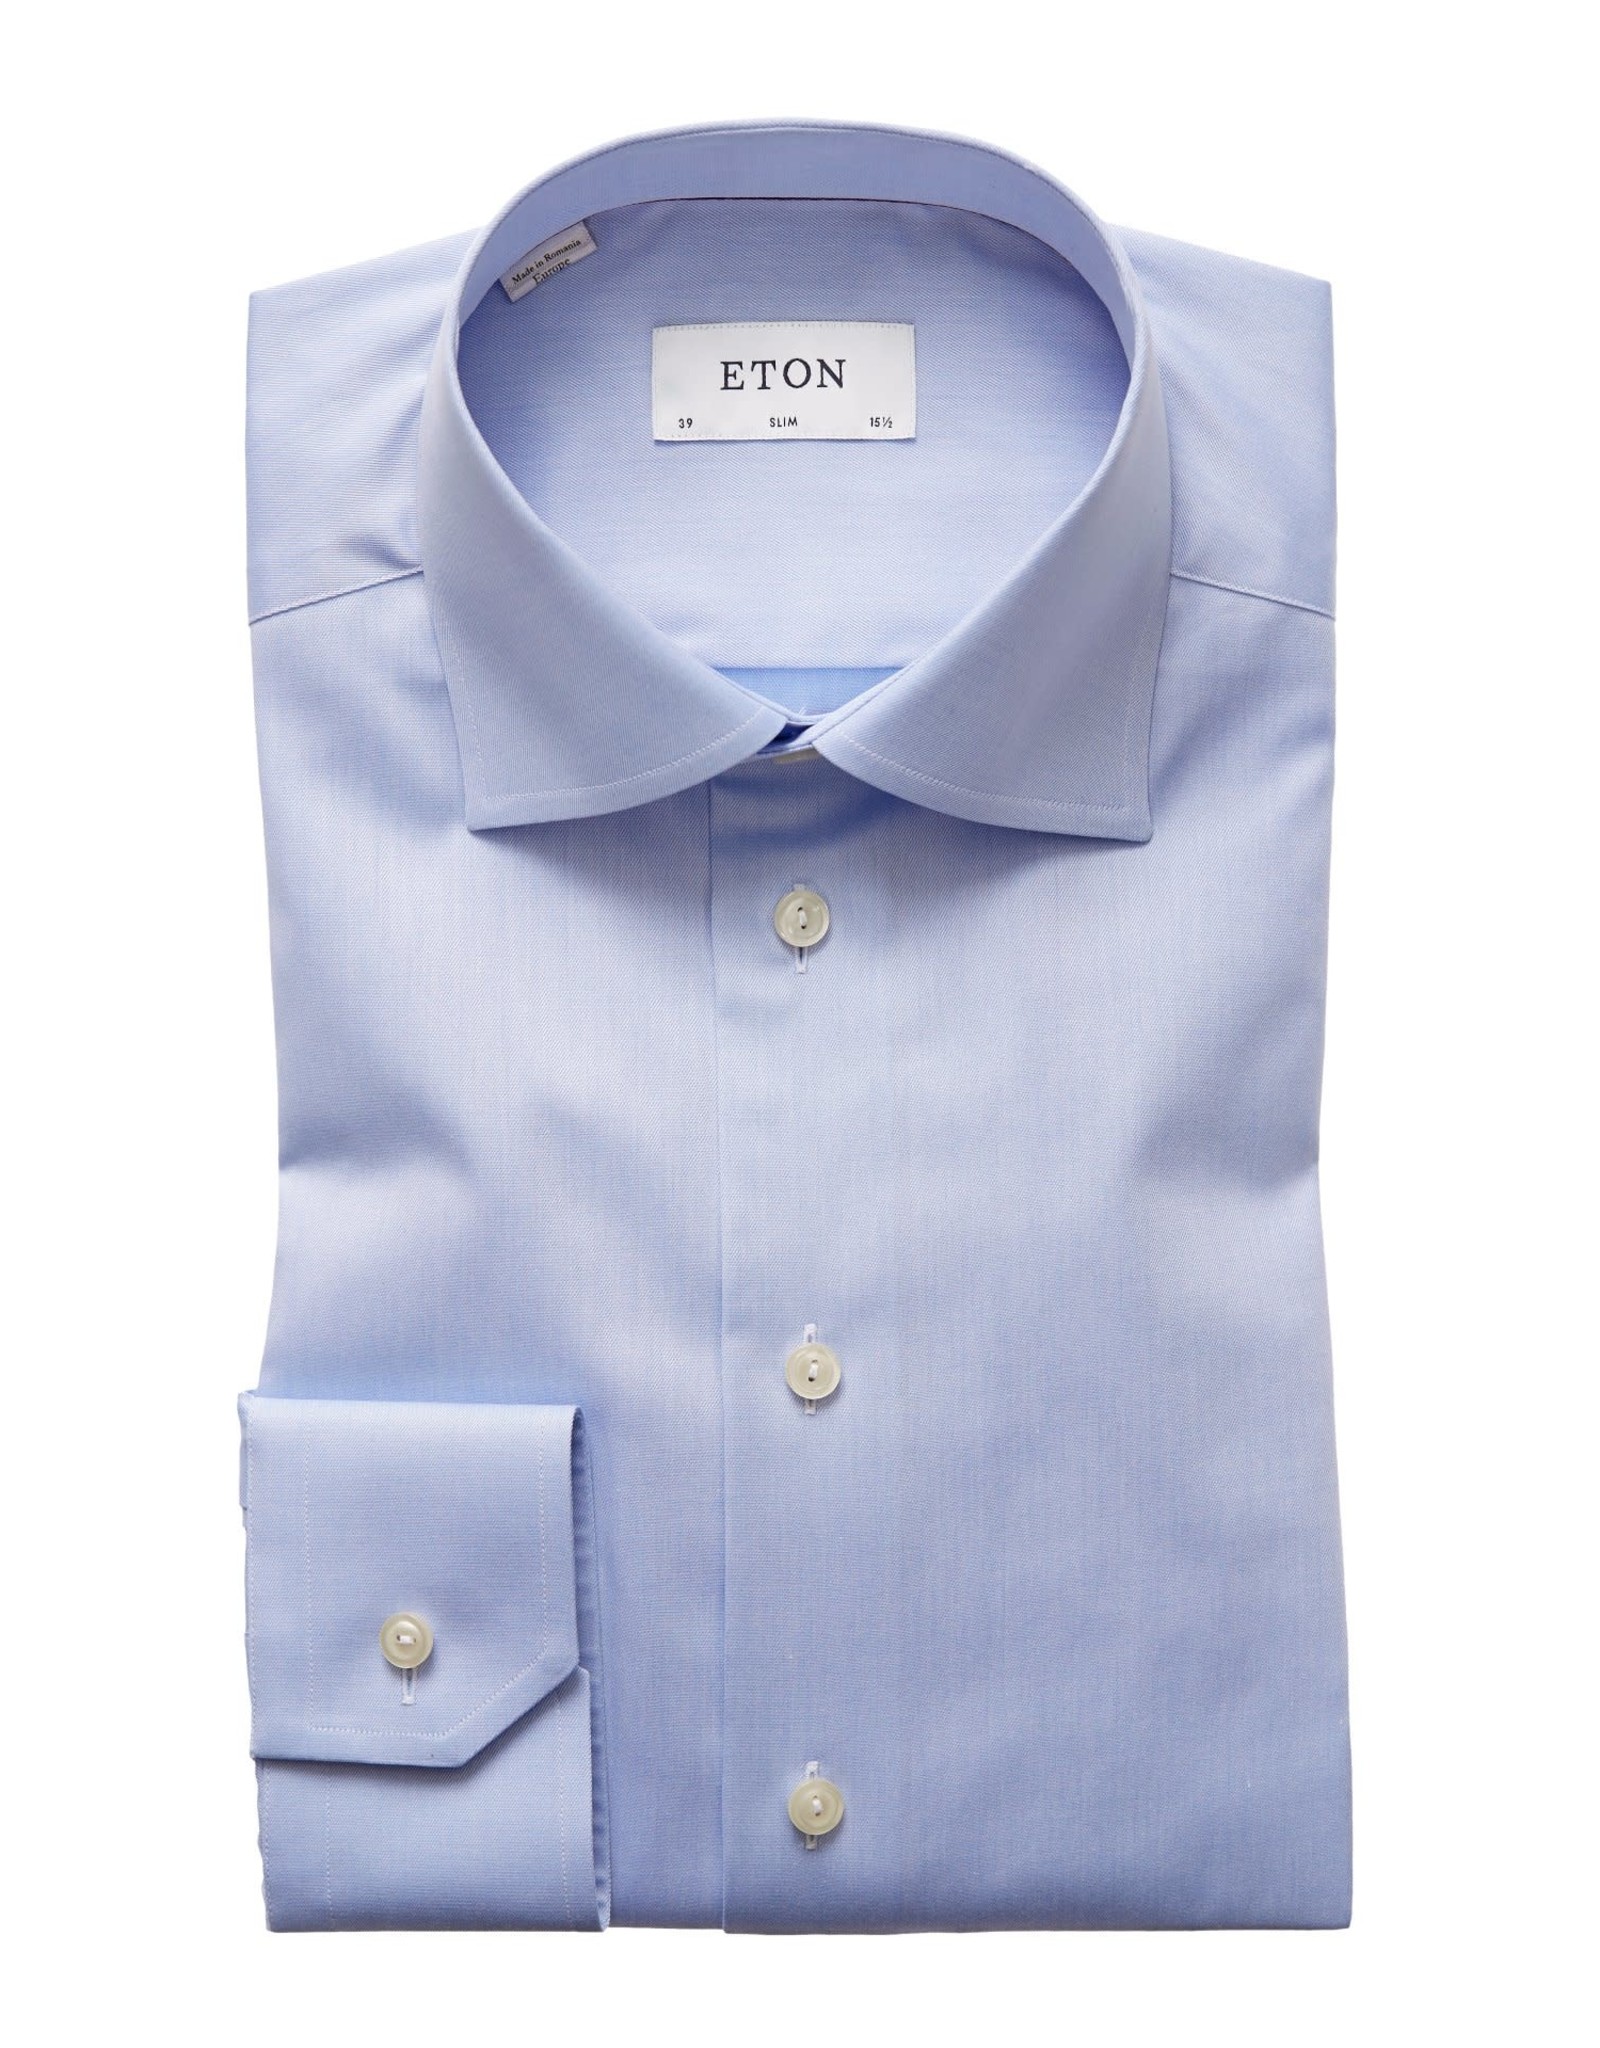 Eton Eton hemd blauw slim 3000-79511/21